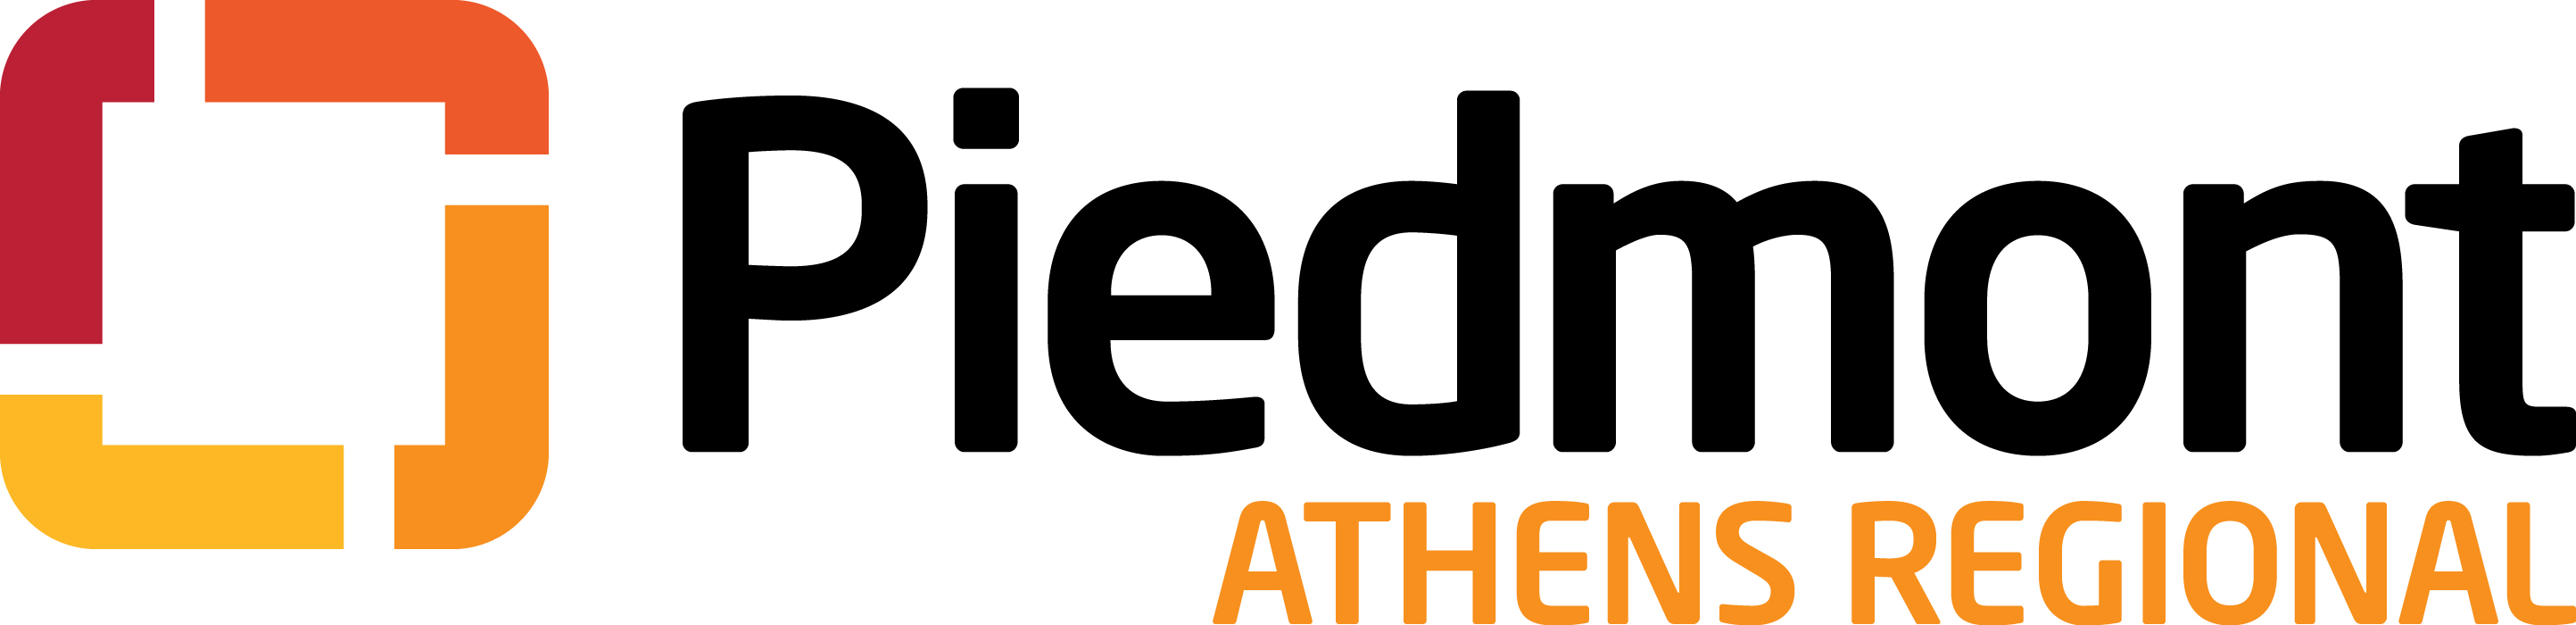 Piedmont Athens Logo